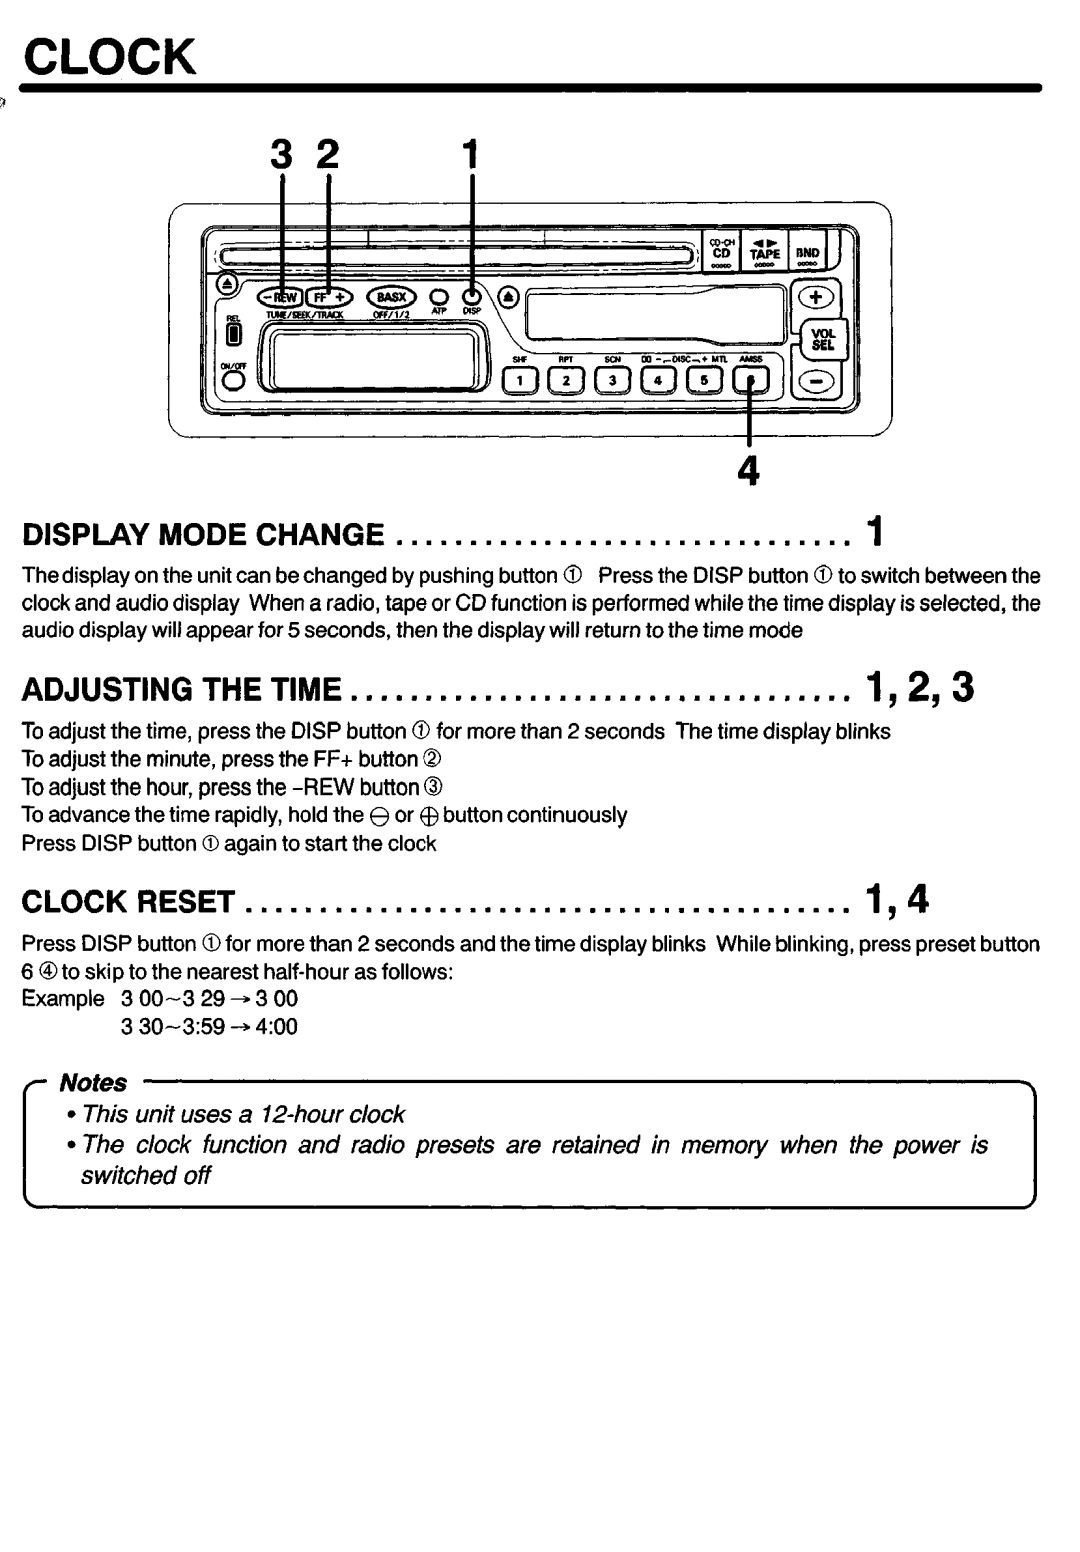 Sanyo FXCD-500 manual Clock, 1,293, Adjusting, Time 